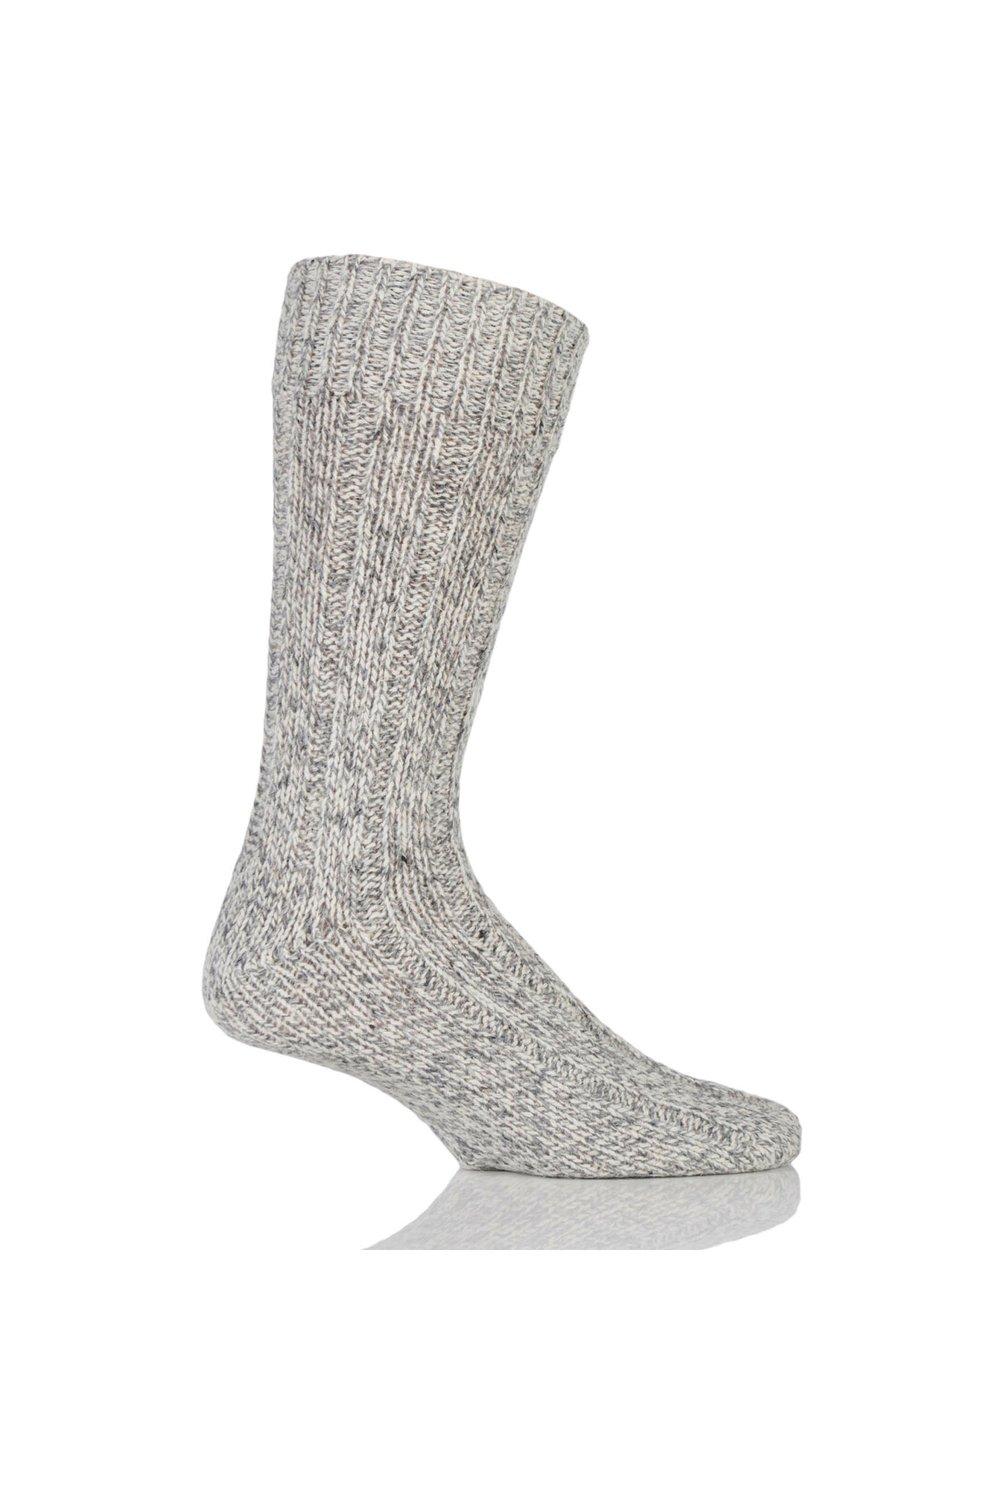 цена 1 пара тяжелых носков для ходьбы из богатой шерсти SOCKSHOP Workforce, серый